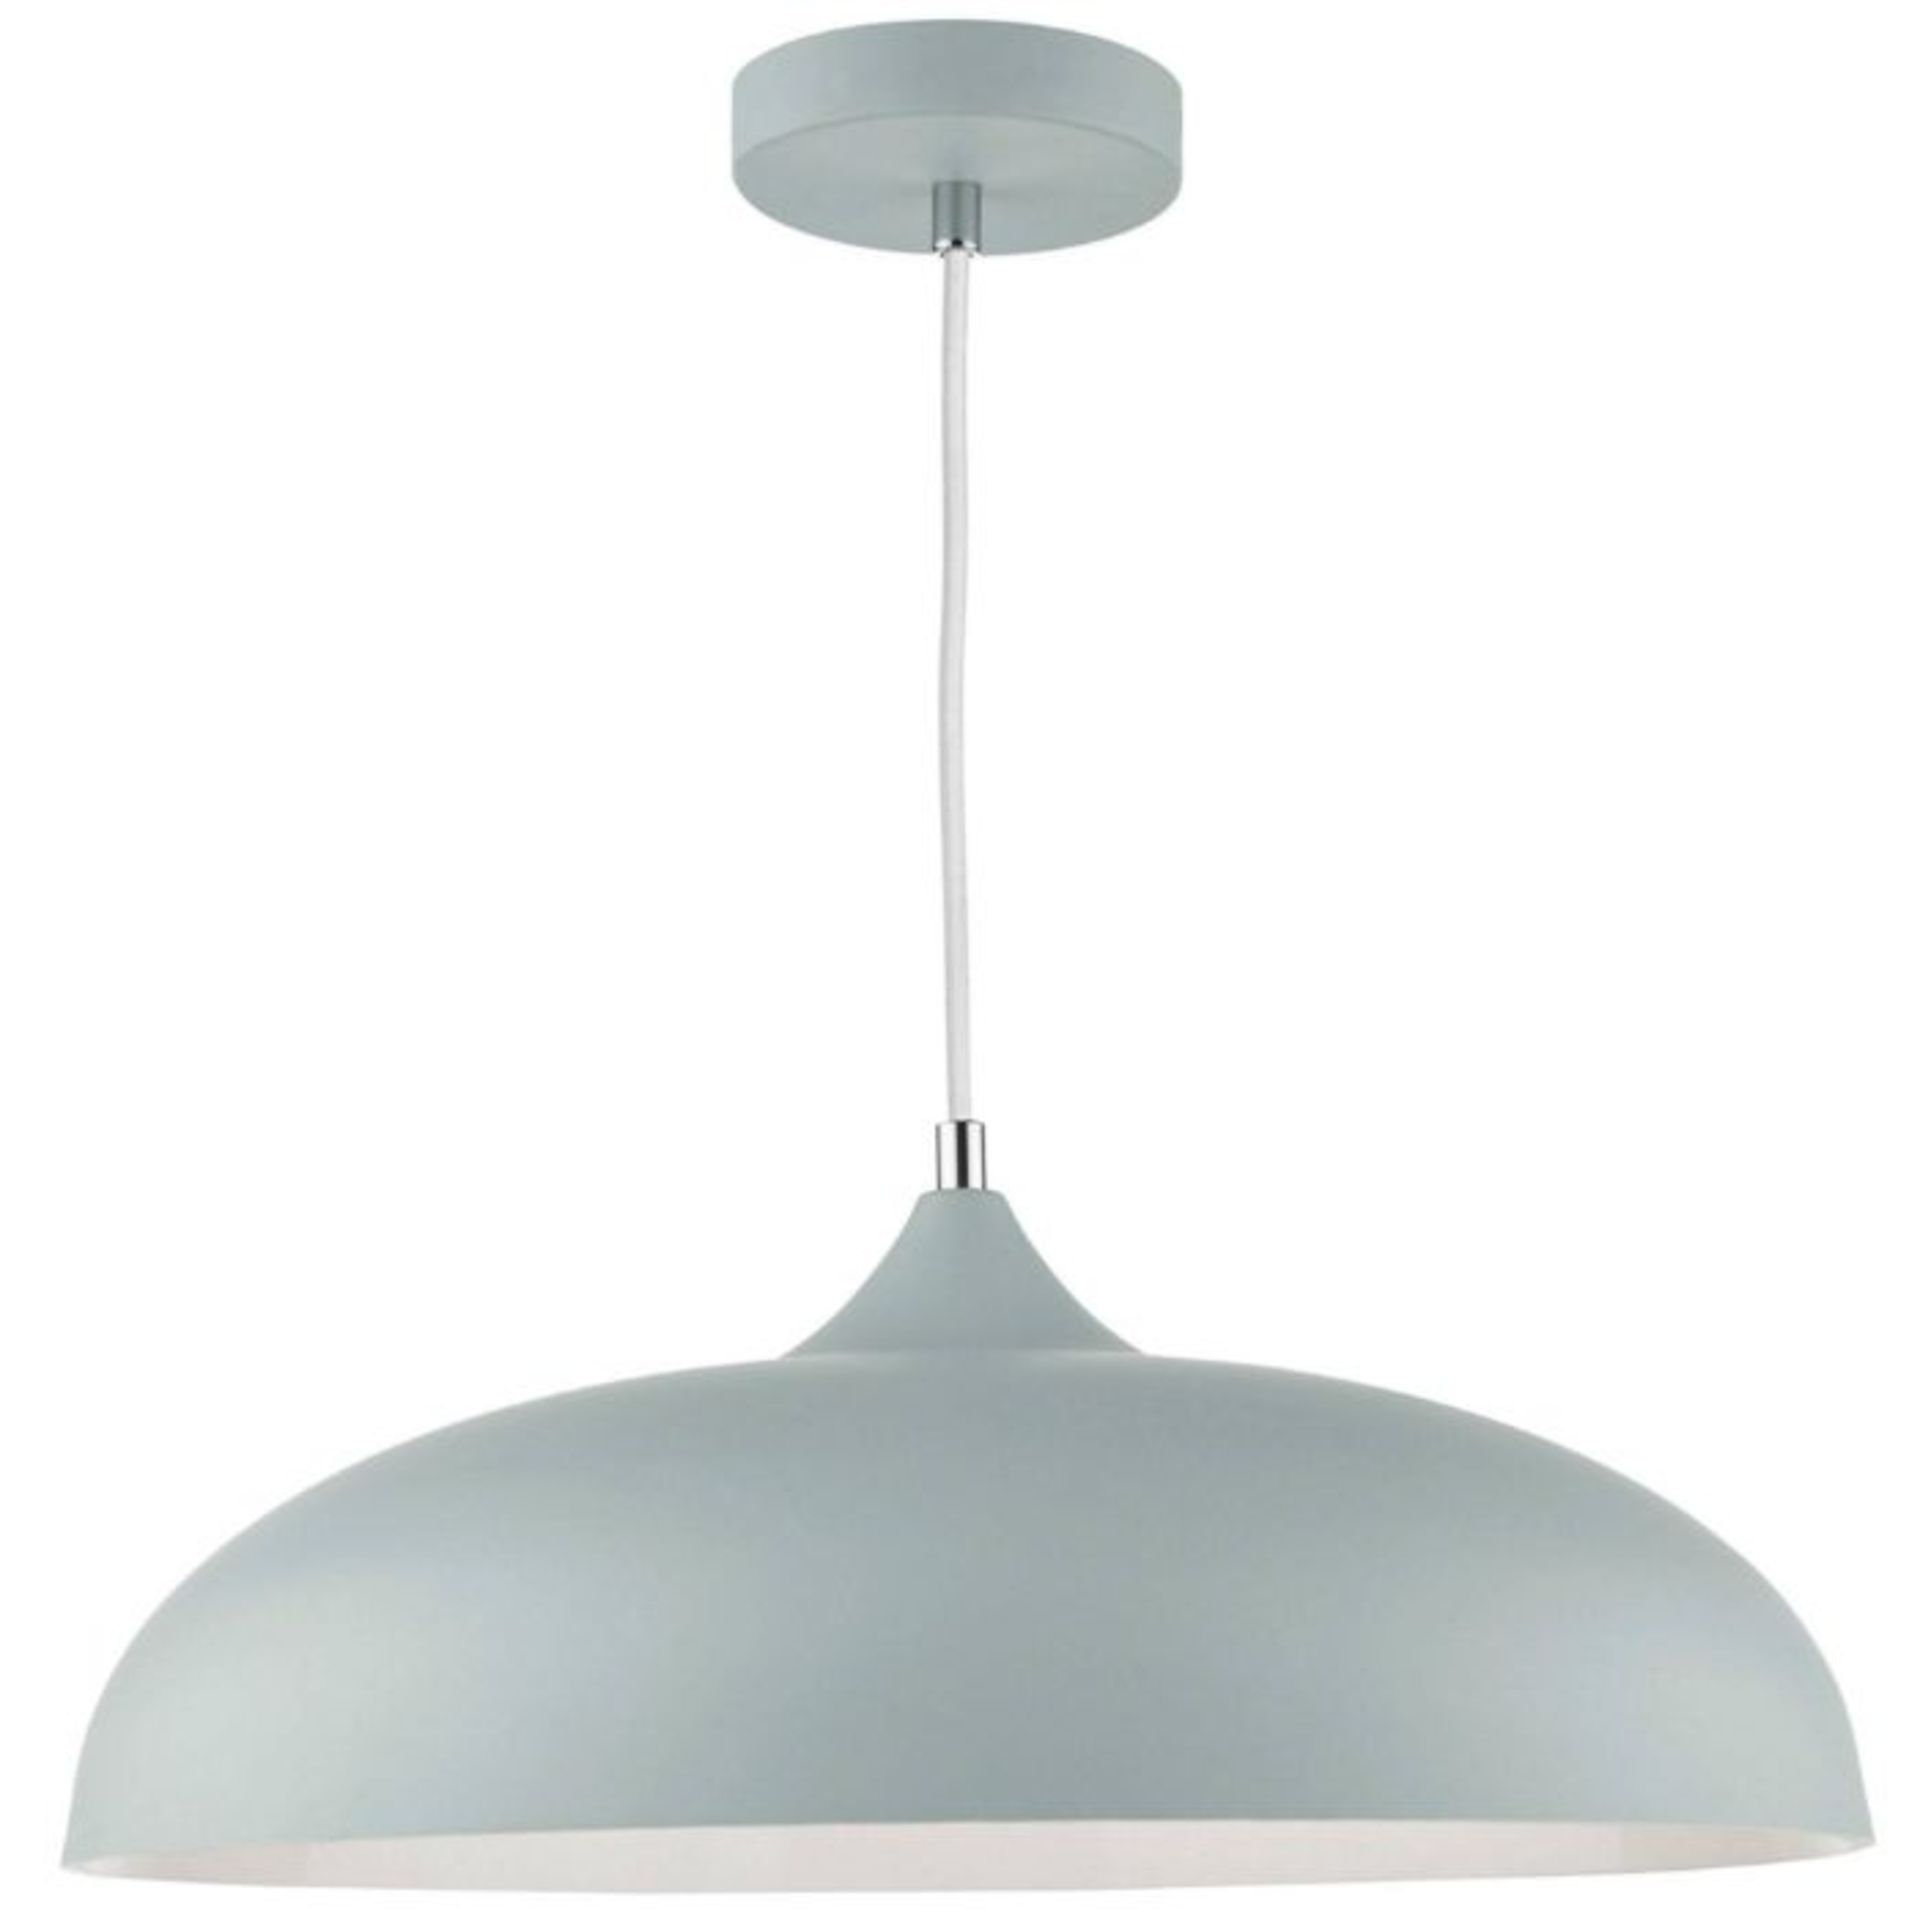 Dar Lighting Kaelan 1-Light Dome Pendant Soft Matt Grey - RRP £55.99 (WSBS1046 - 13659/18)